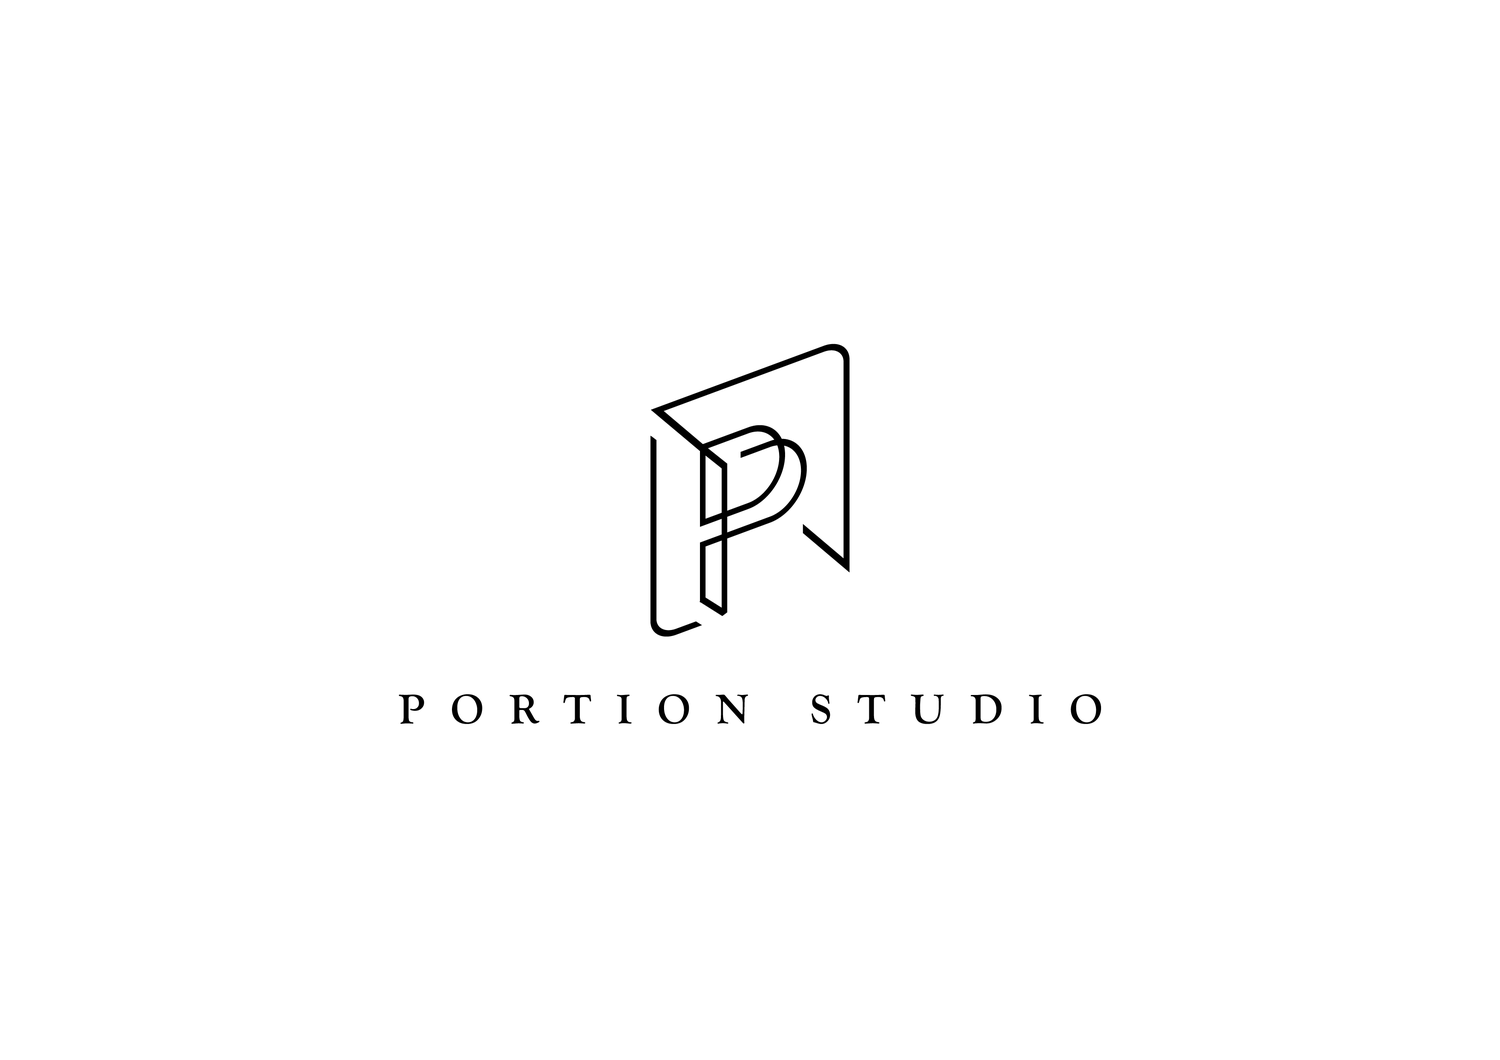 Portion Studio